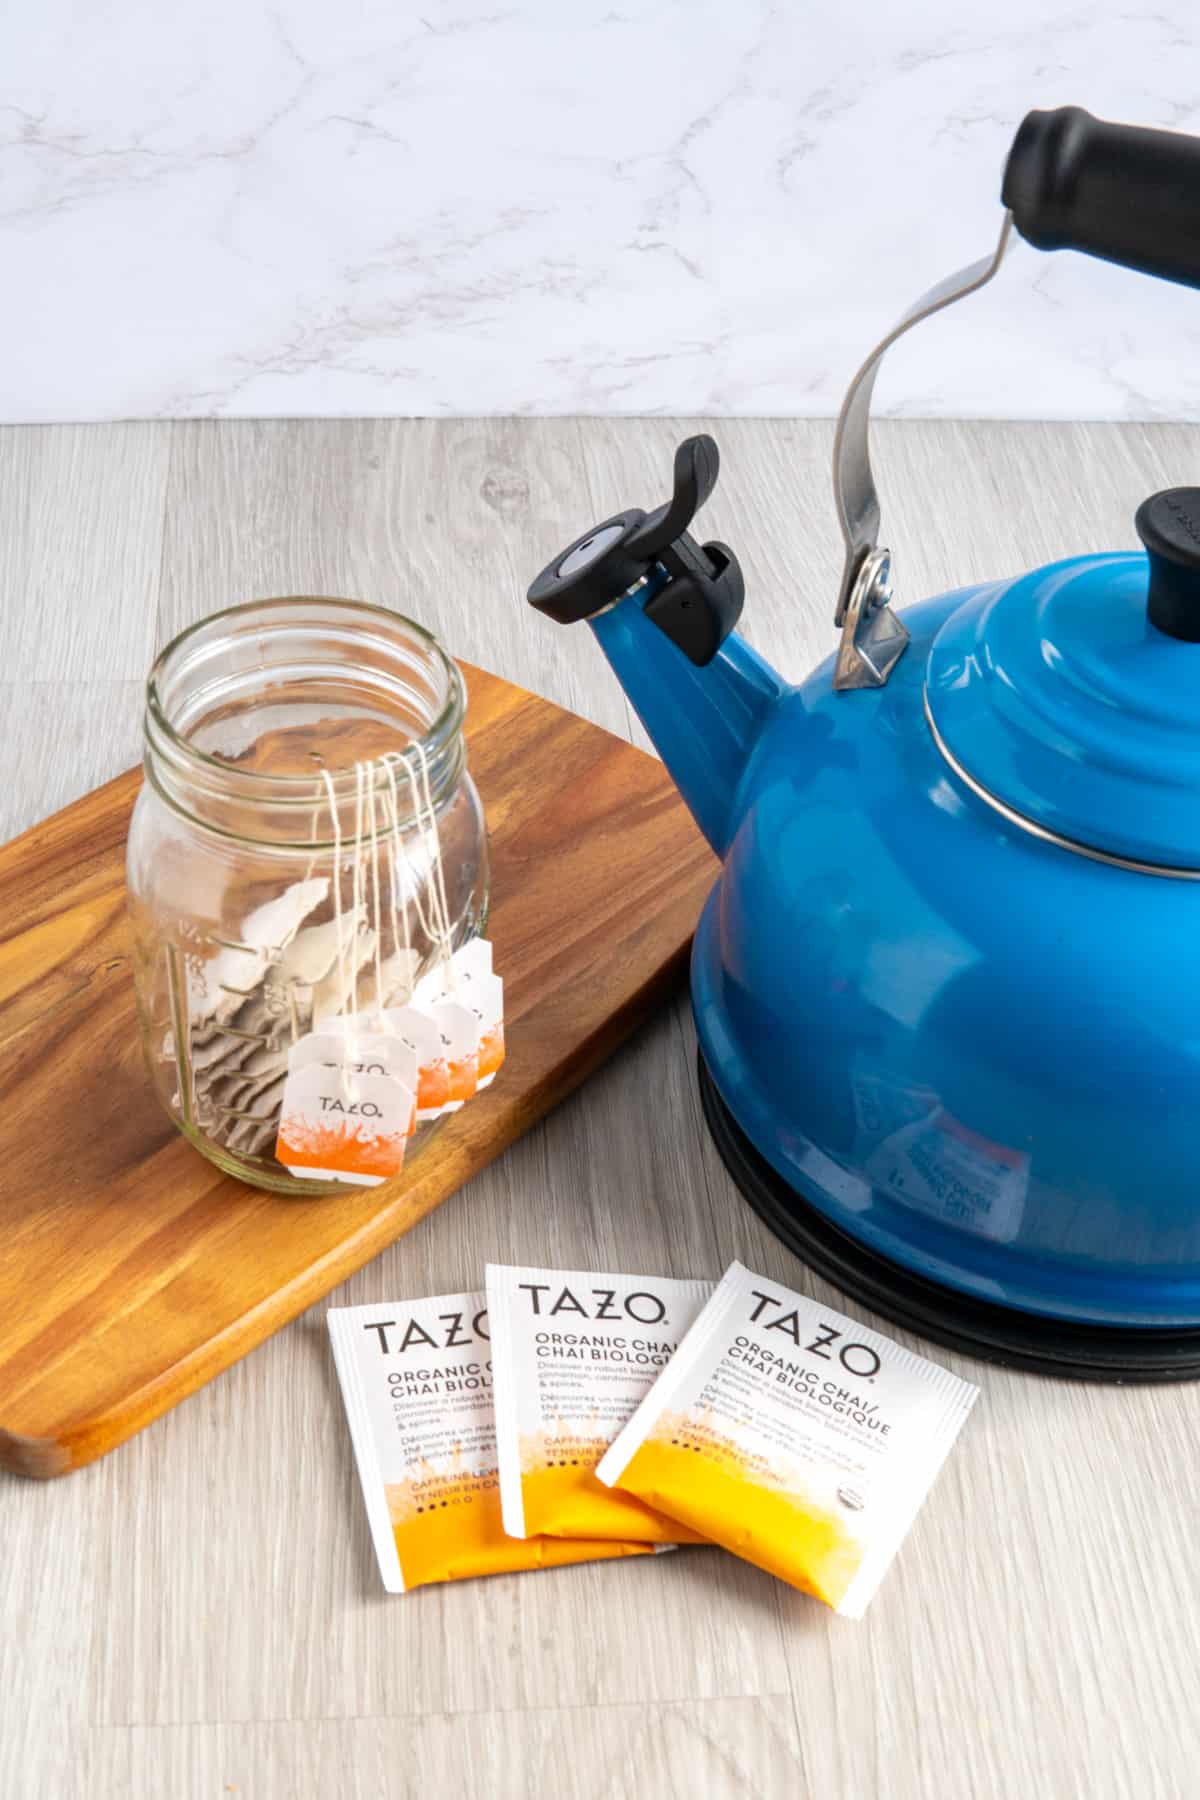 A jar with Tazo chai tea bags next to a blue Le Creuset kettle.